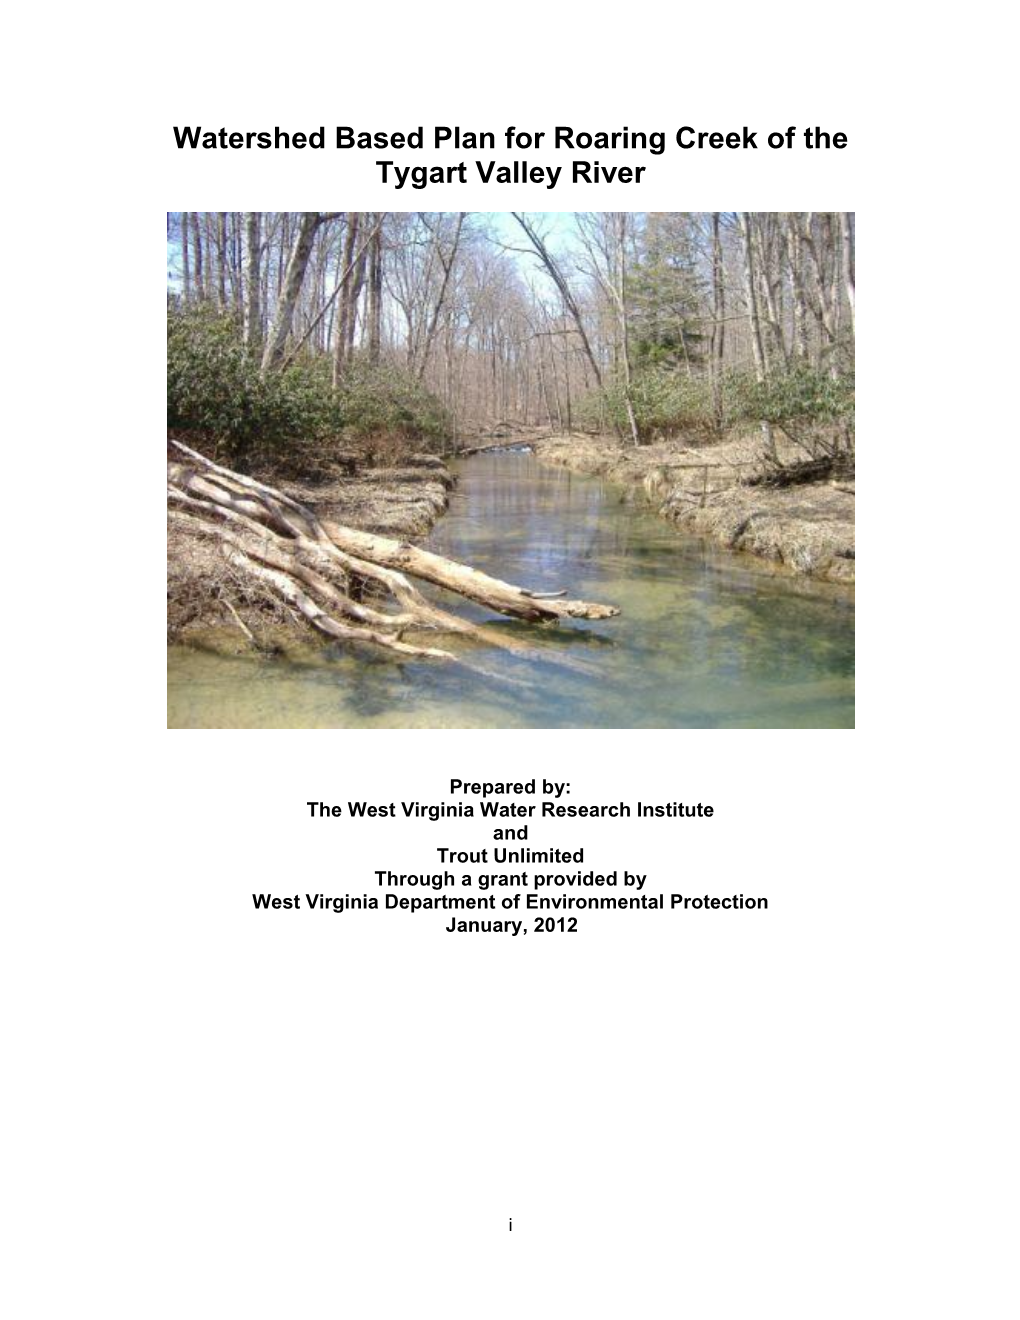 Roaring Creek of the Tygart Valley River